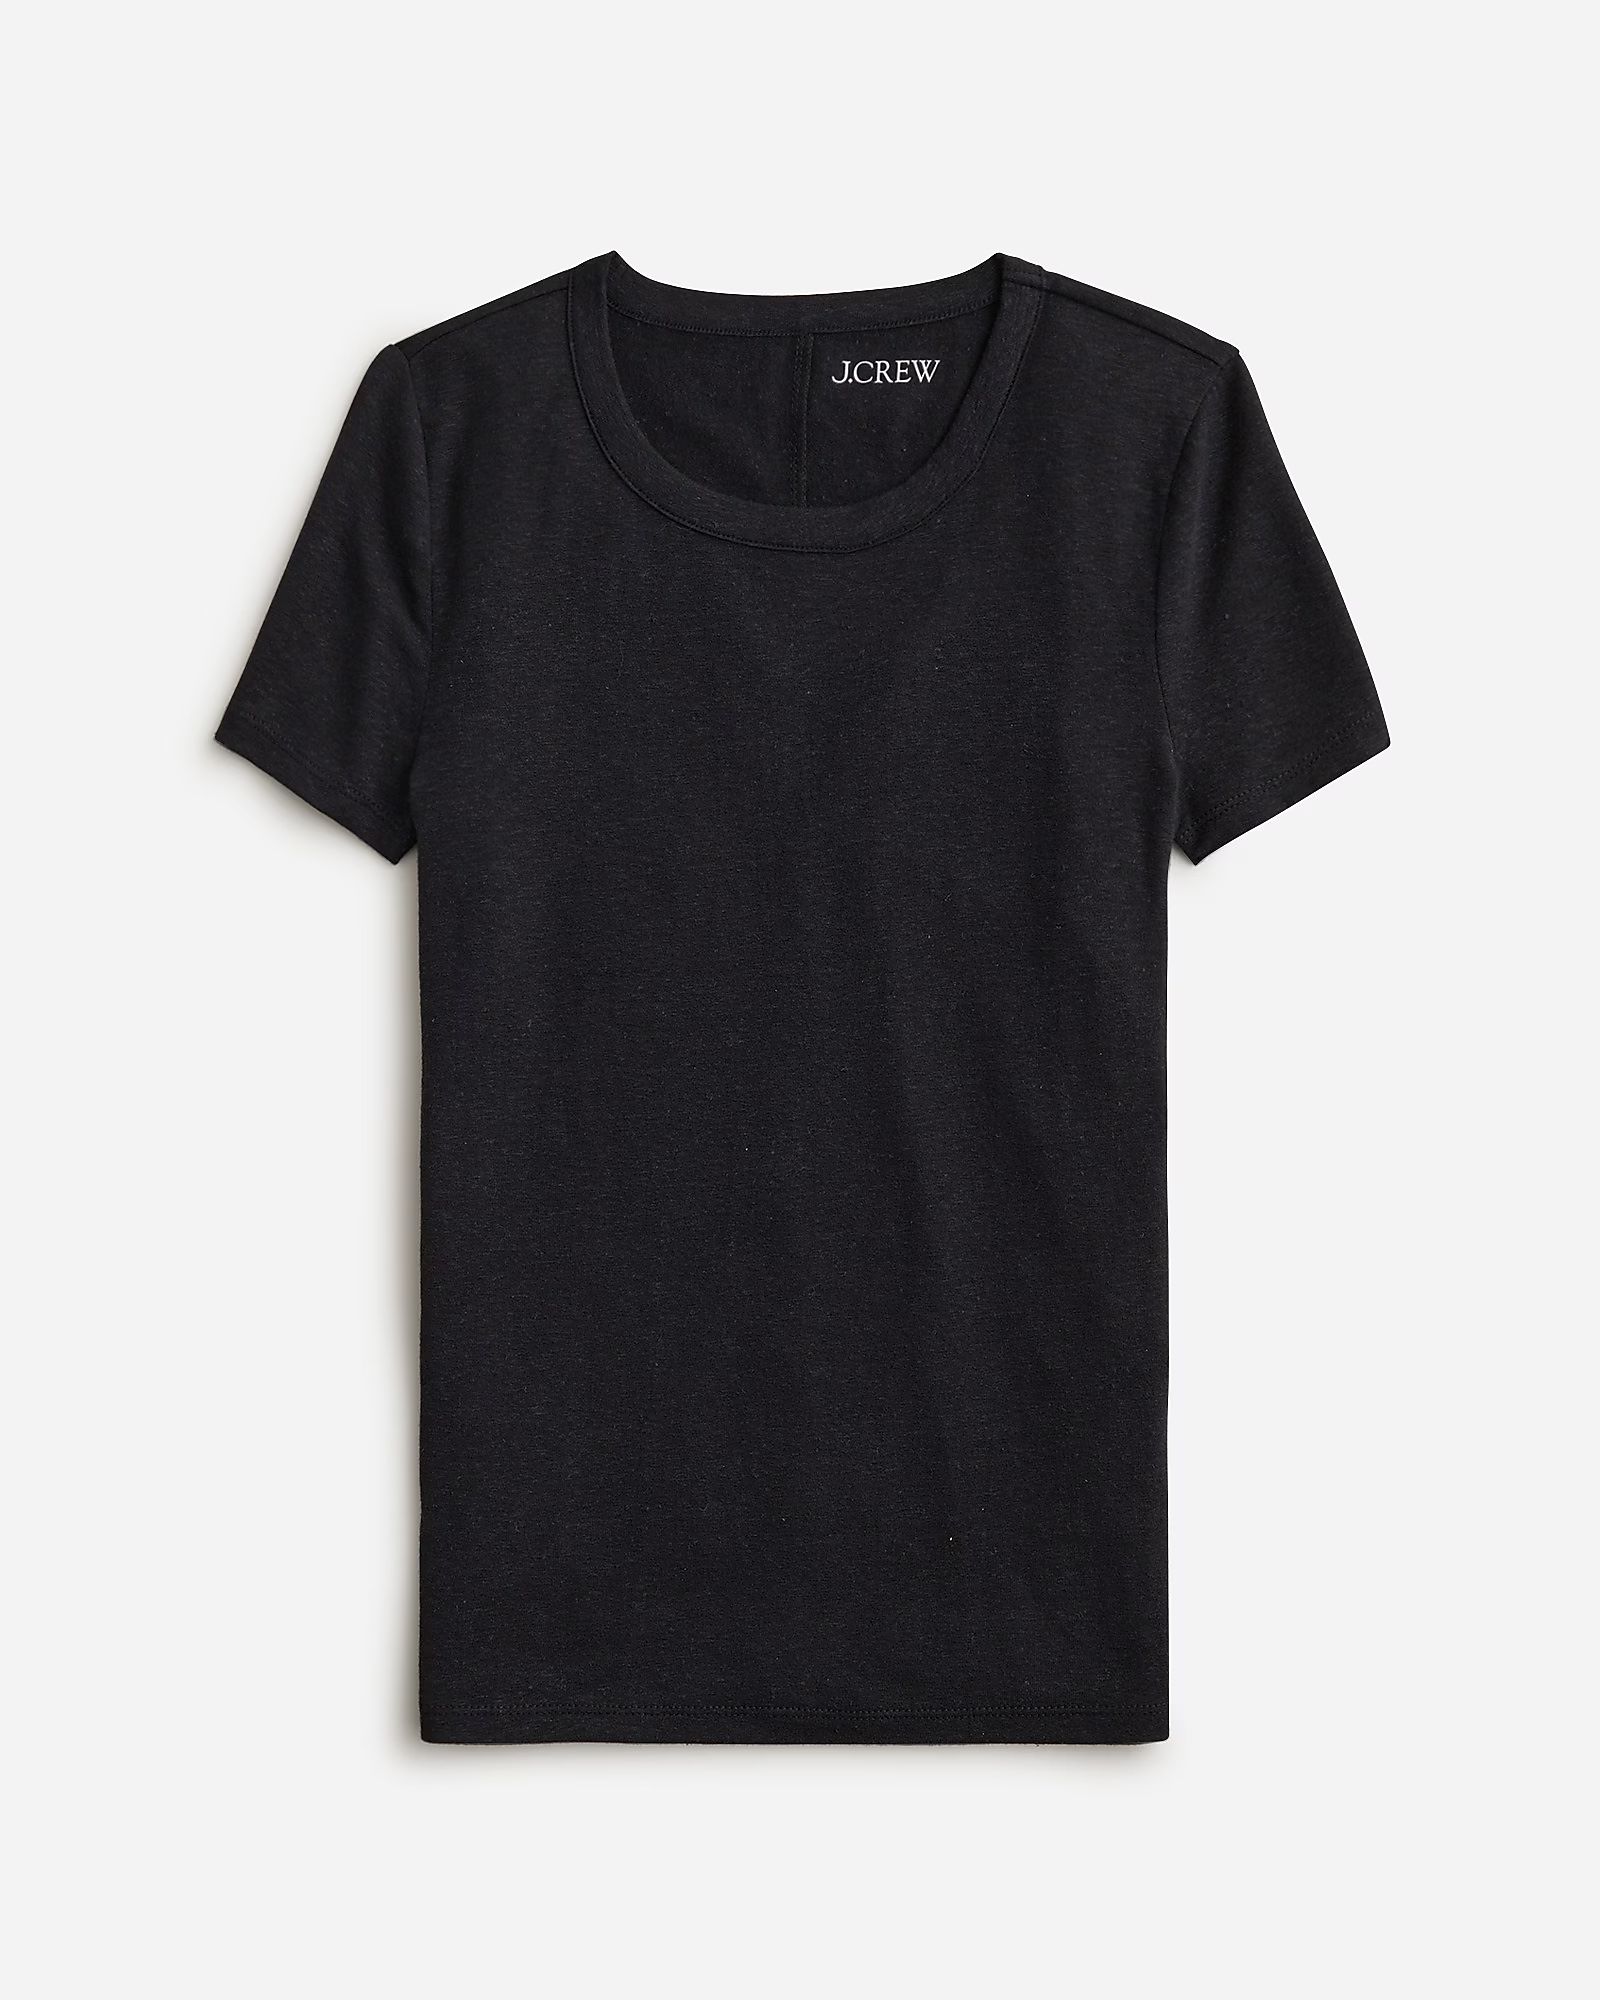 best seller4.7(14 REVIEWS)Stretch linen-blend crewneck T-shirt$29.50$49.50 (40% Off)Limited time.... | J.Crew US